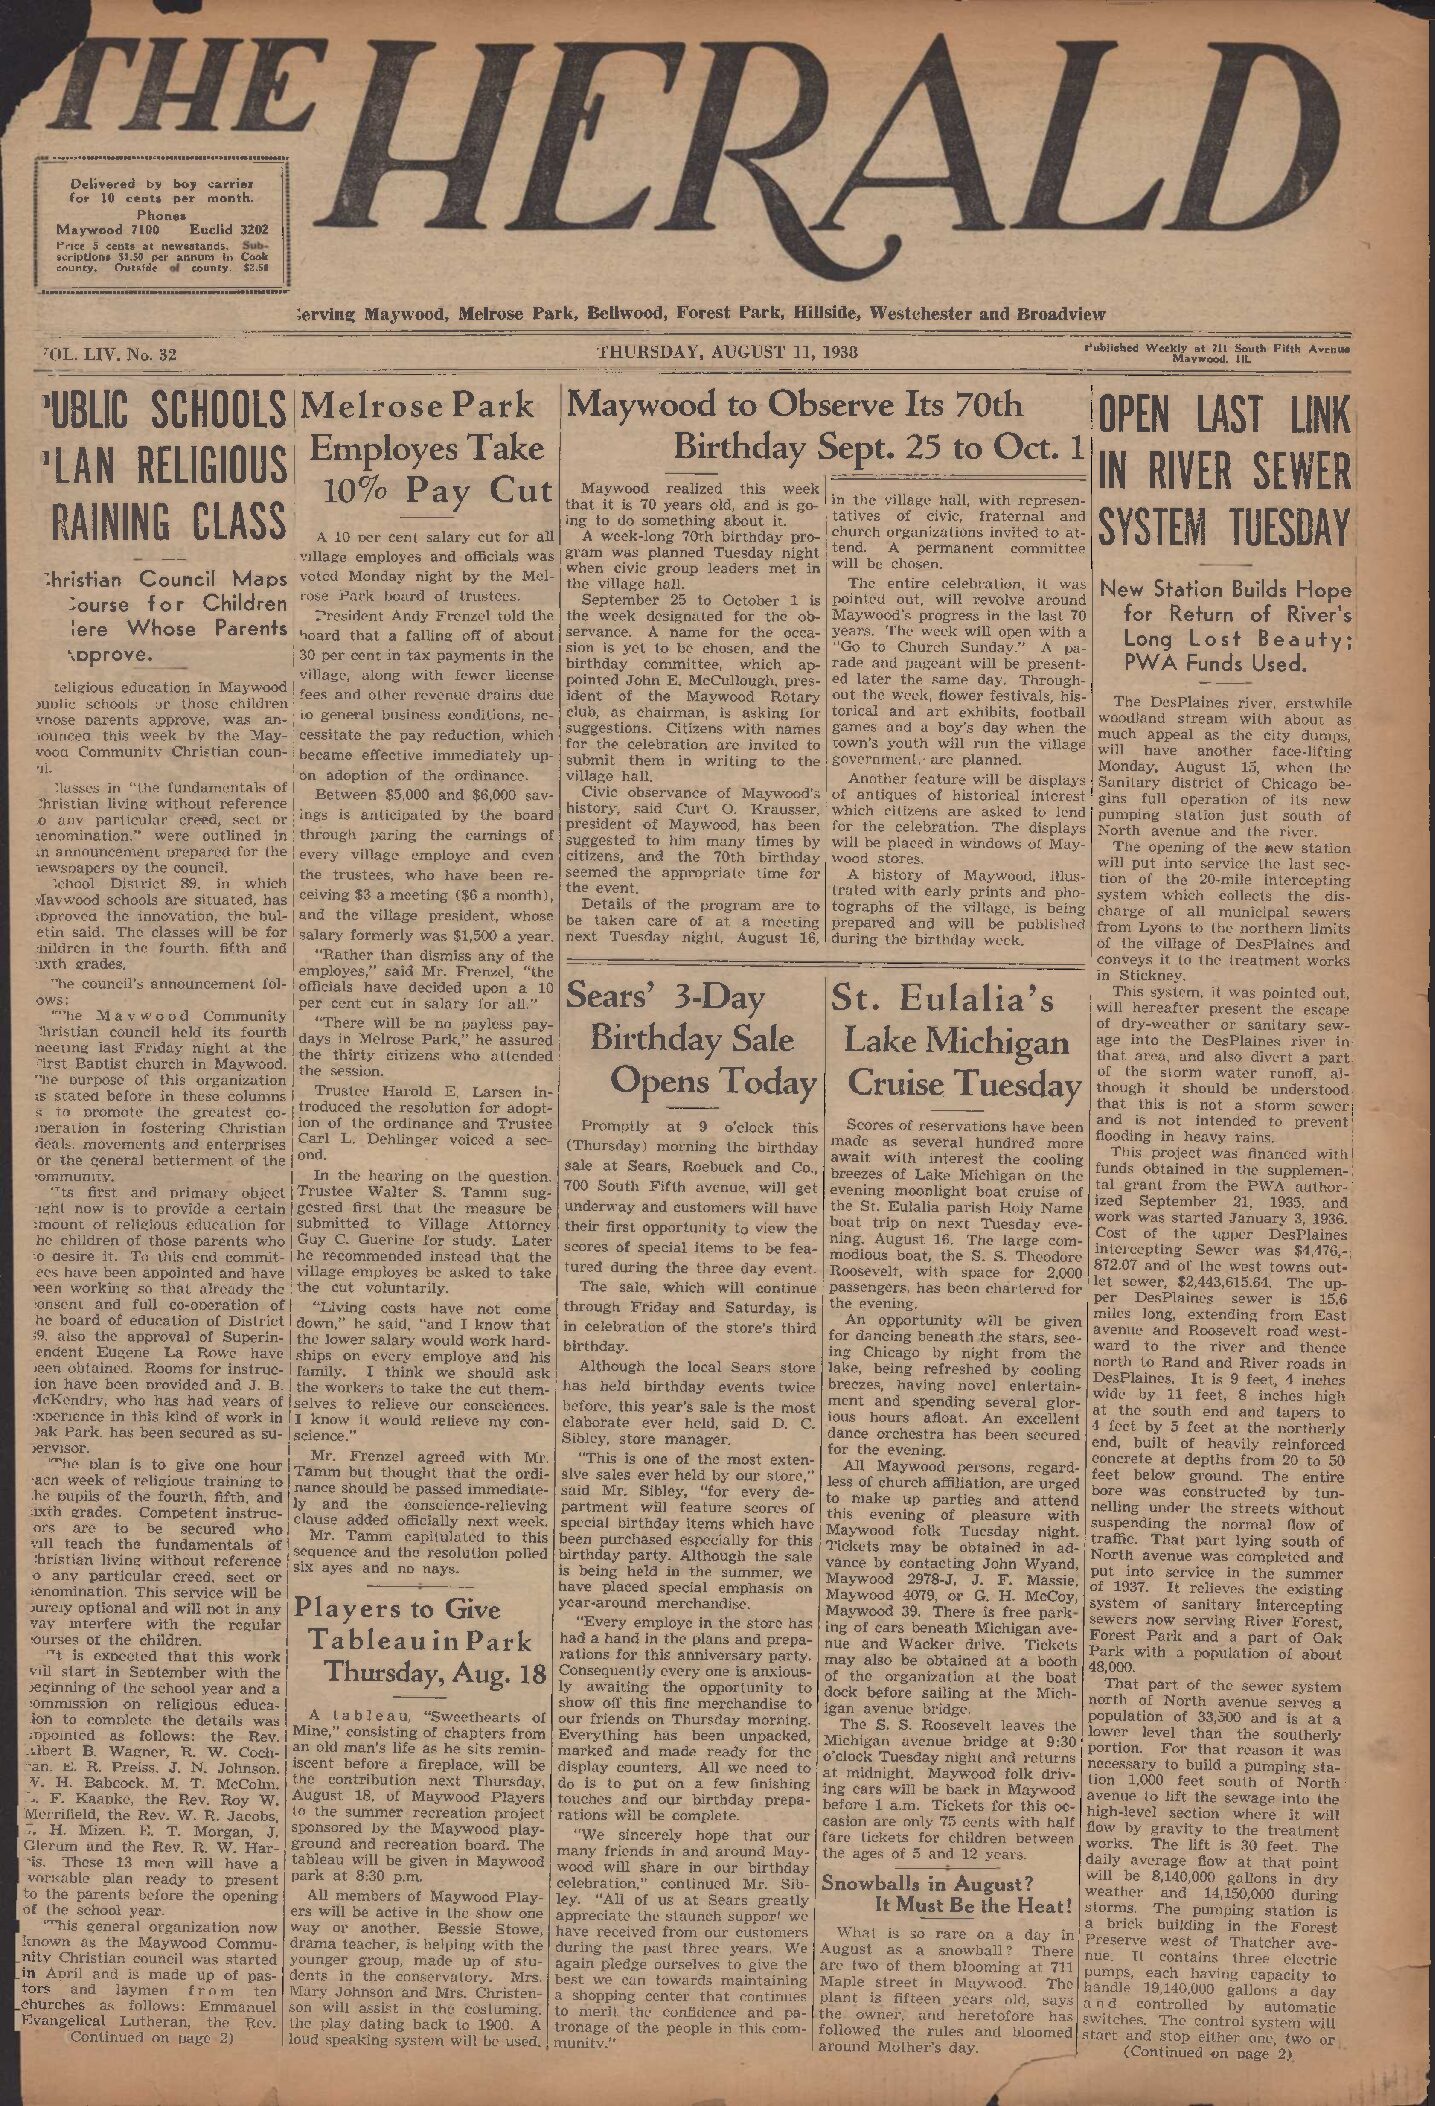 The Herald – 19380811